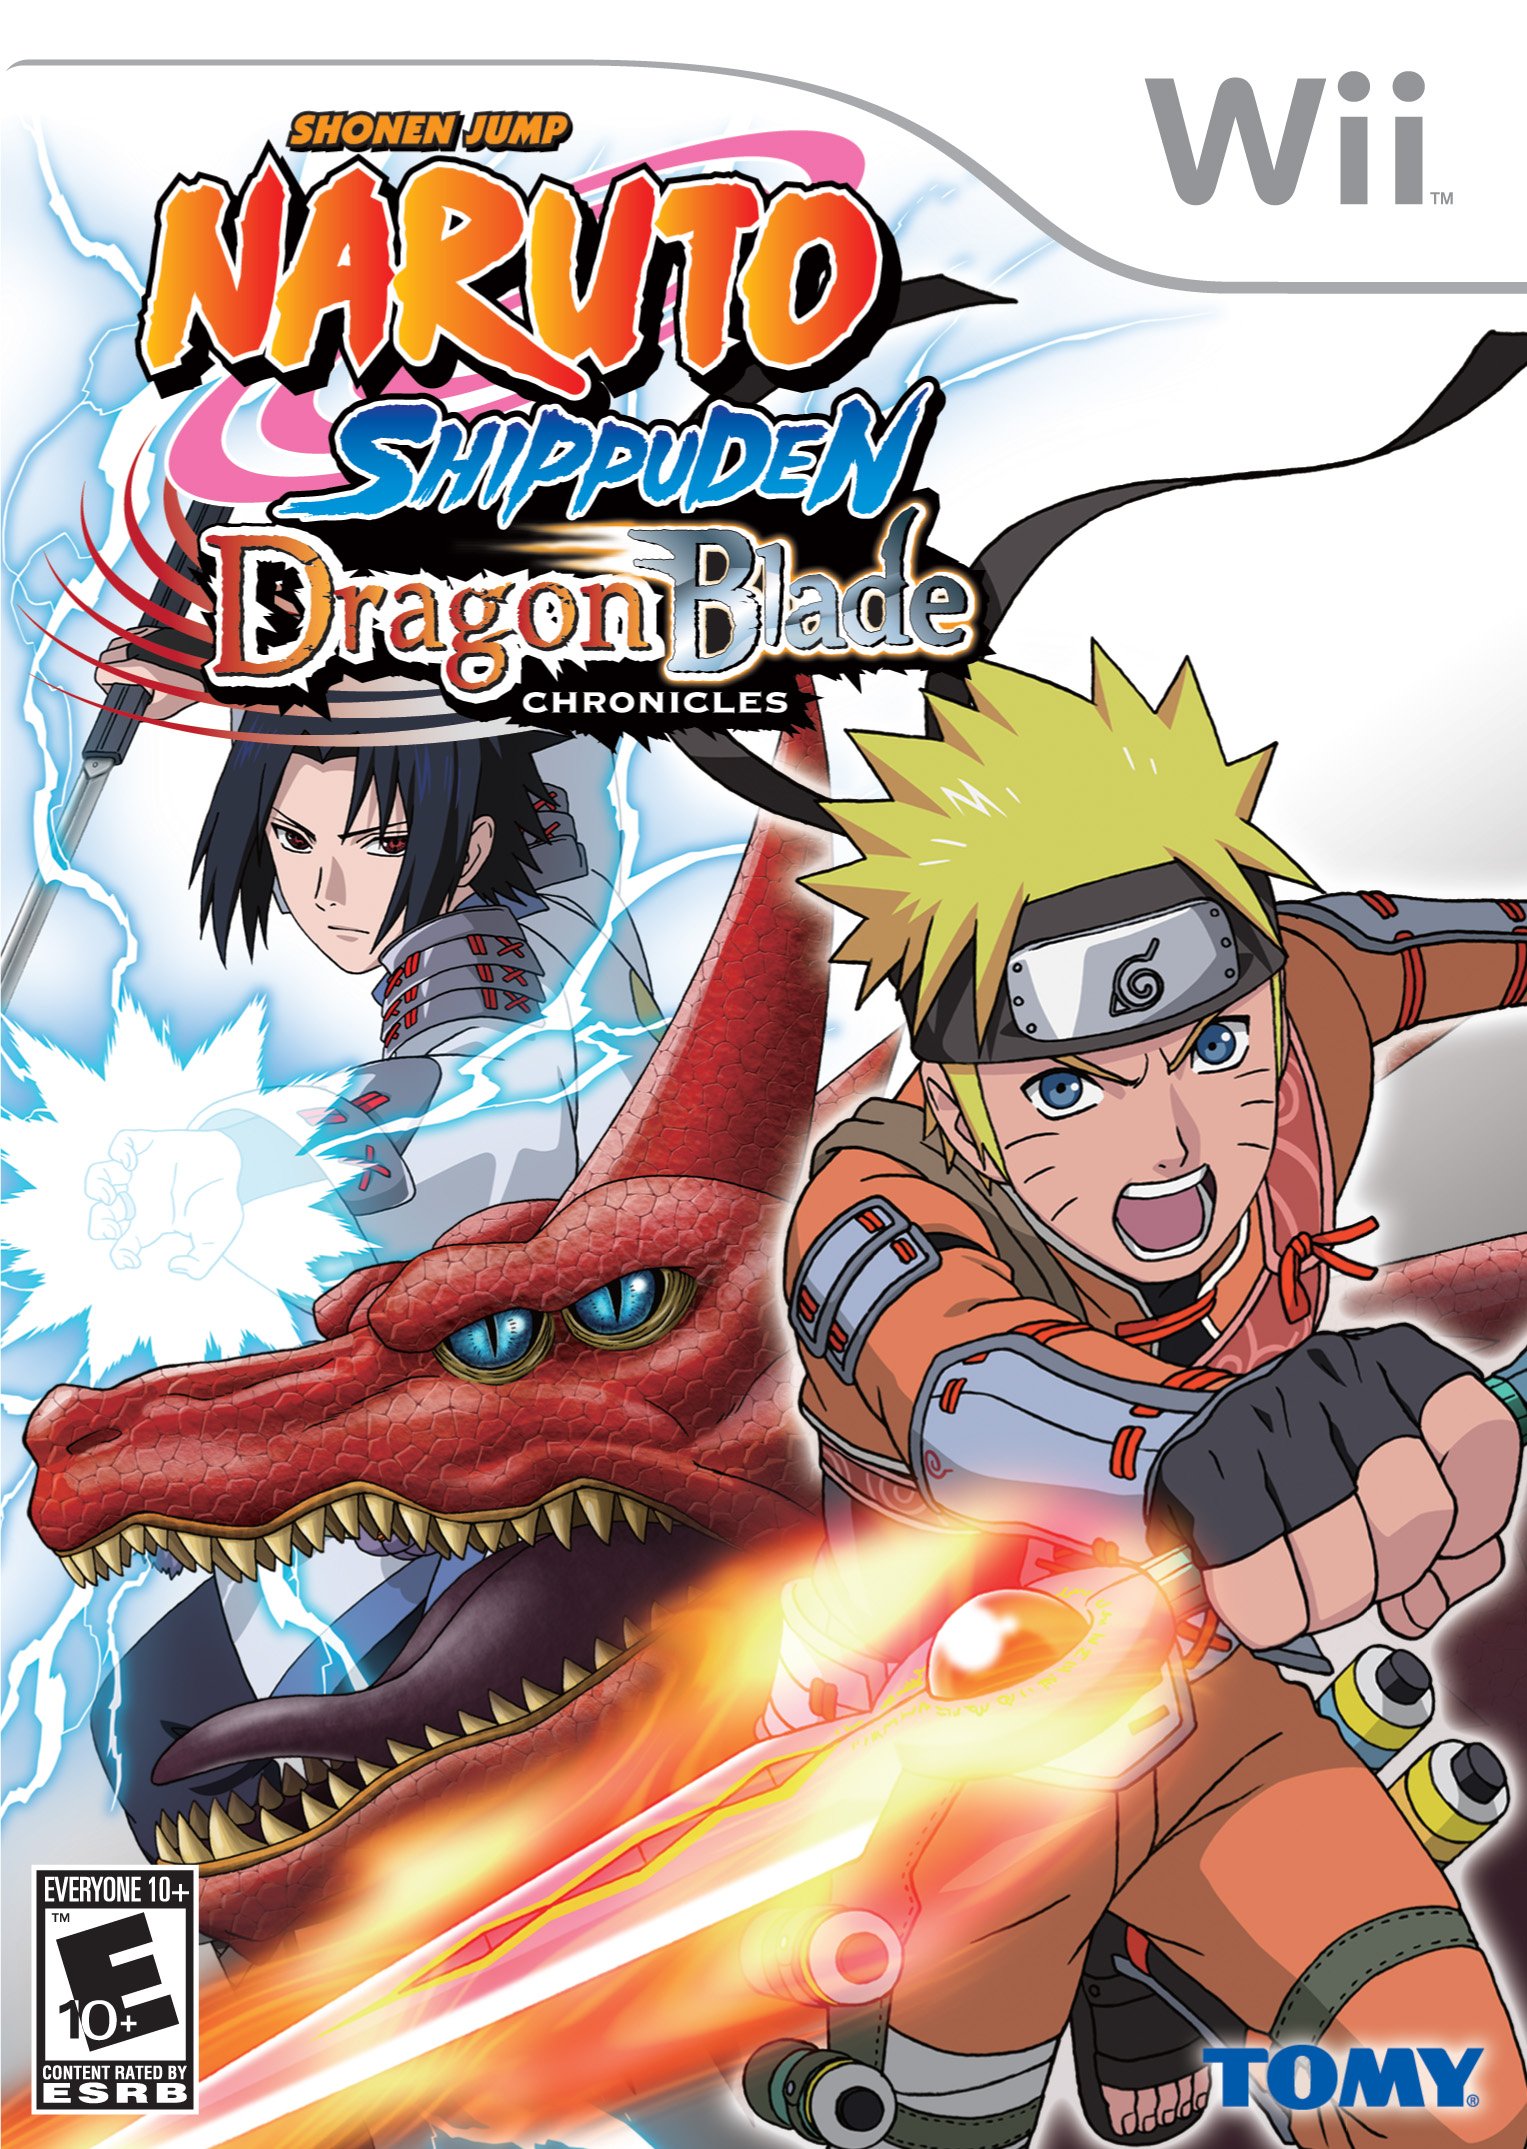 Image of Naruto Shippuden: Dragon Blade Chronicles